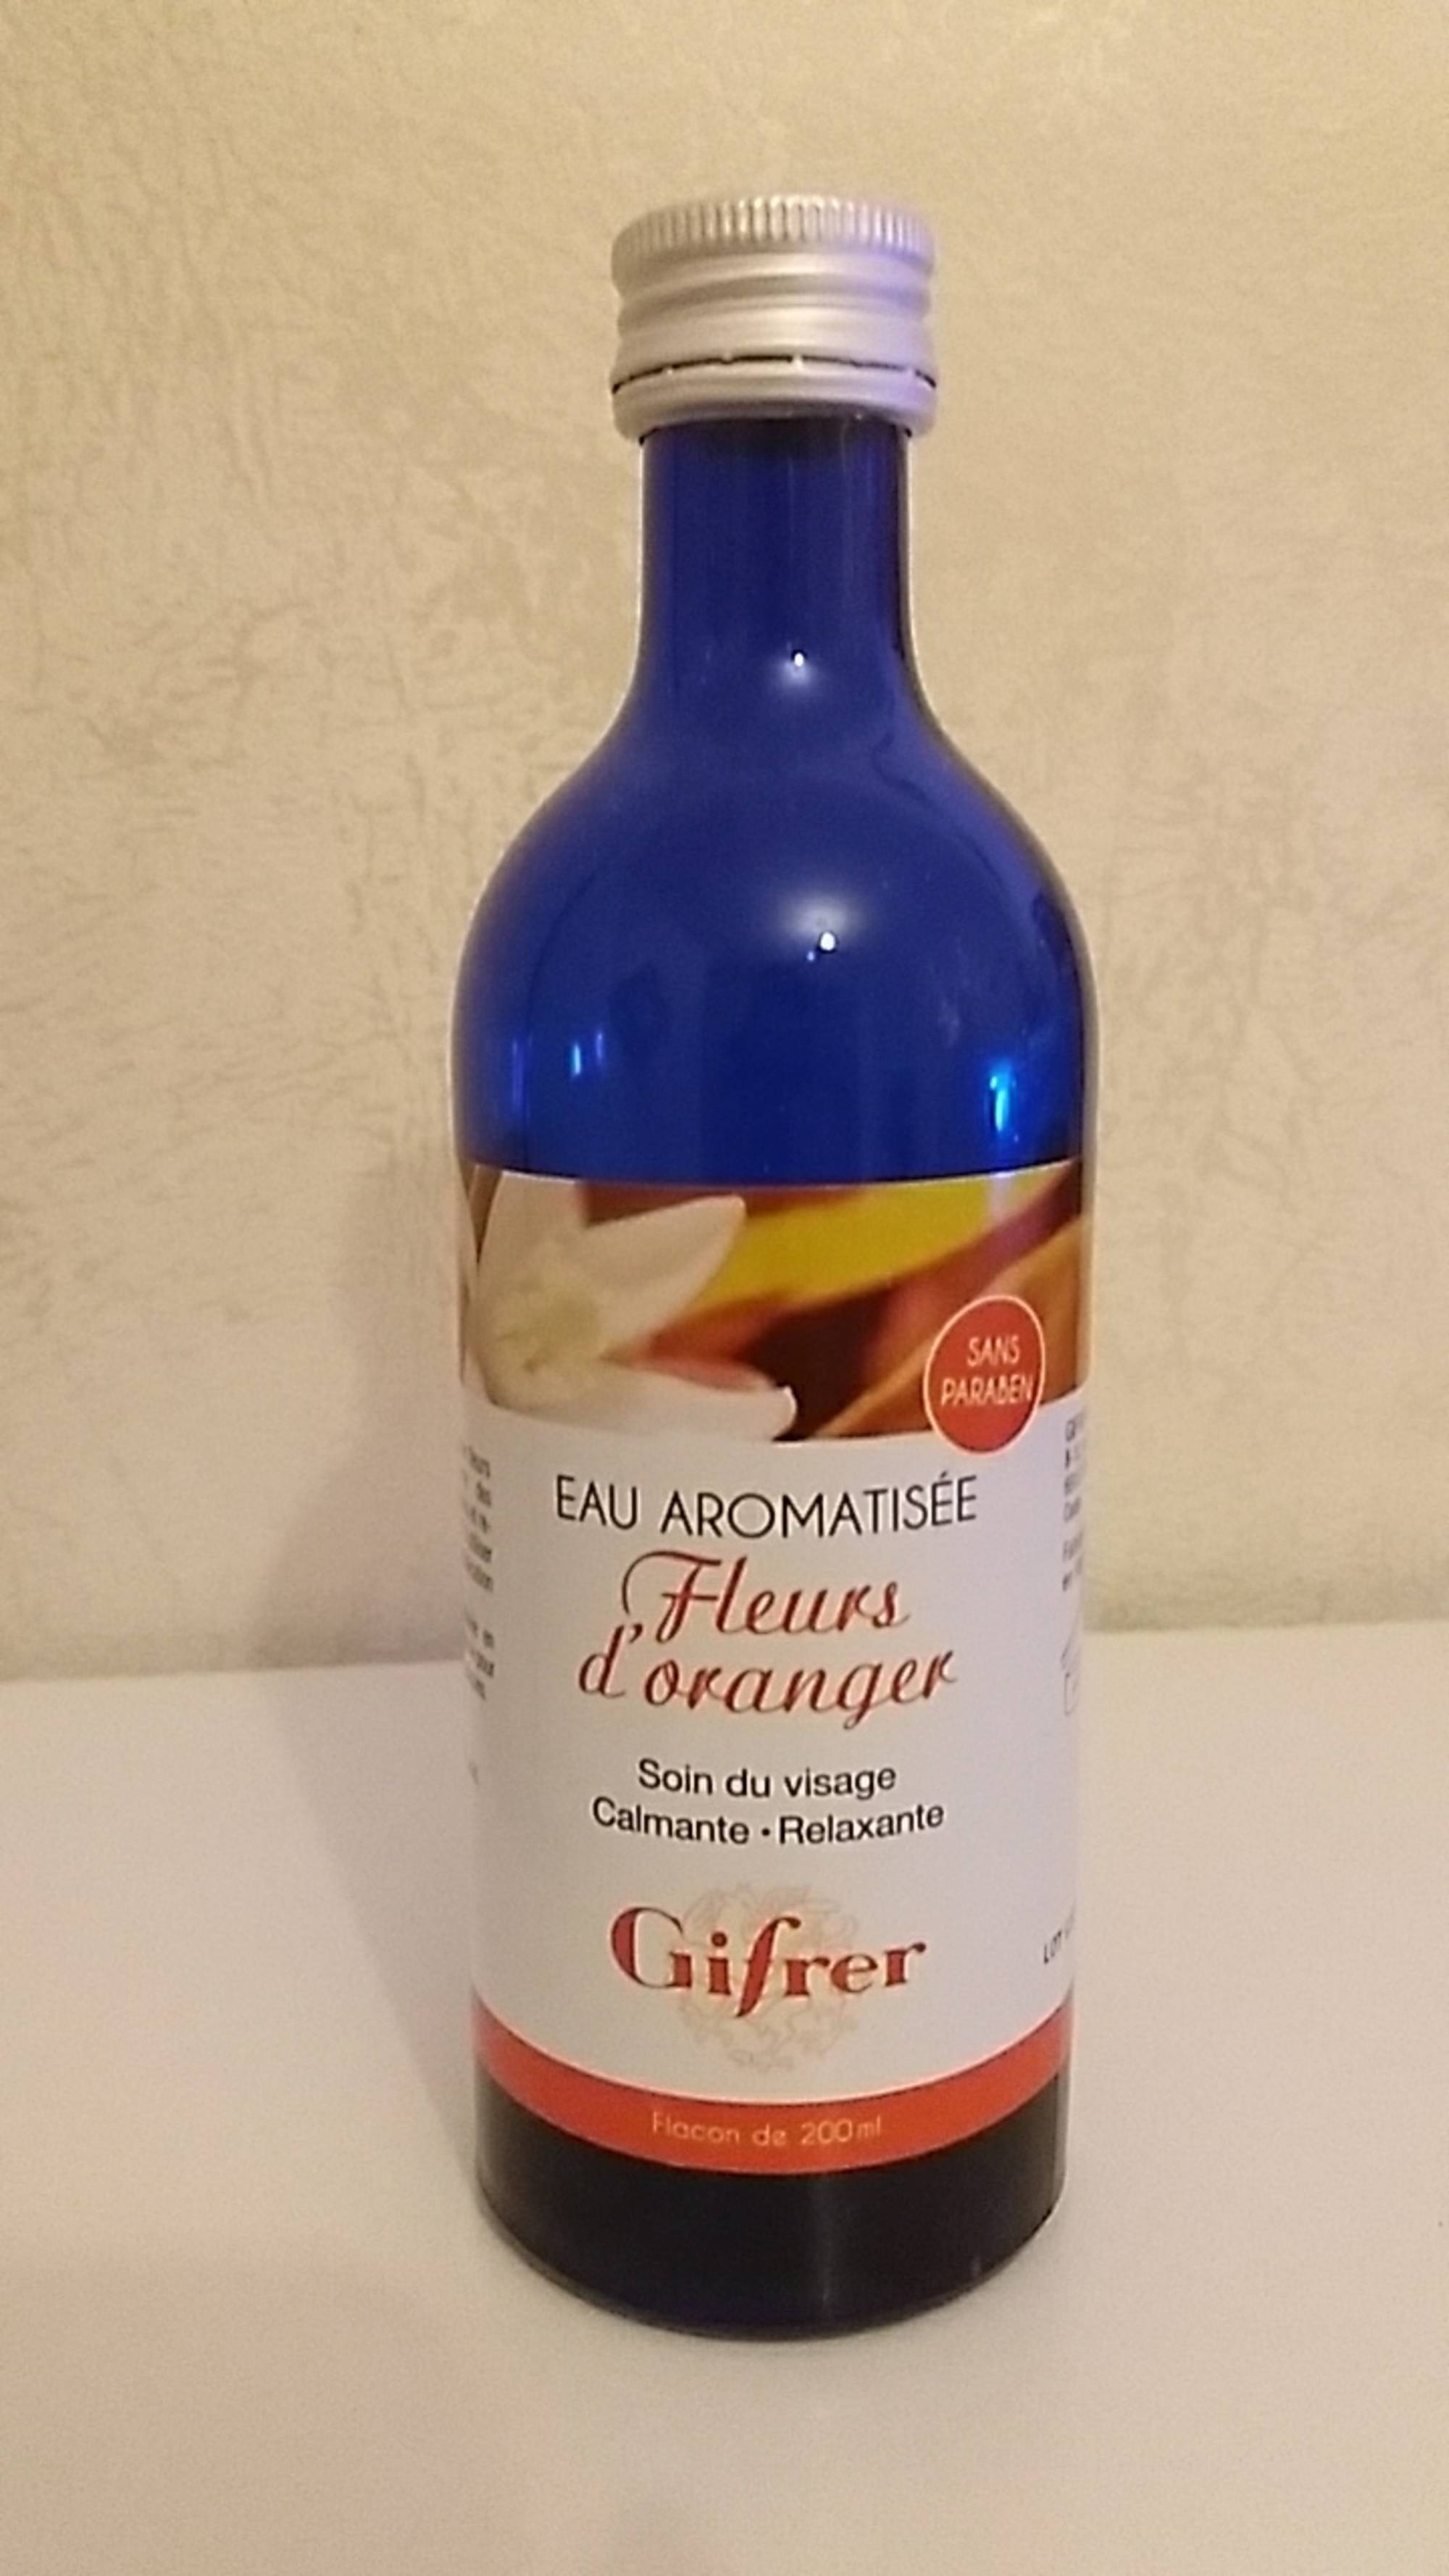 GIFRER - Fleurs d'oranger - Eau aromatisée